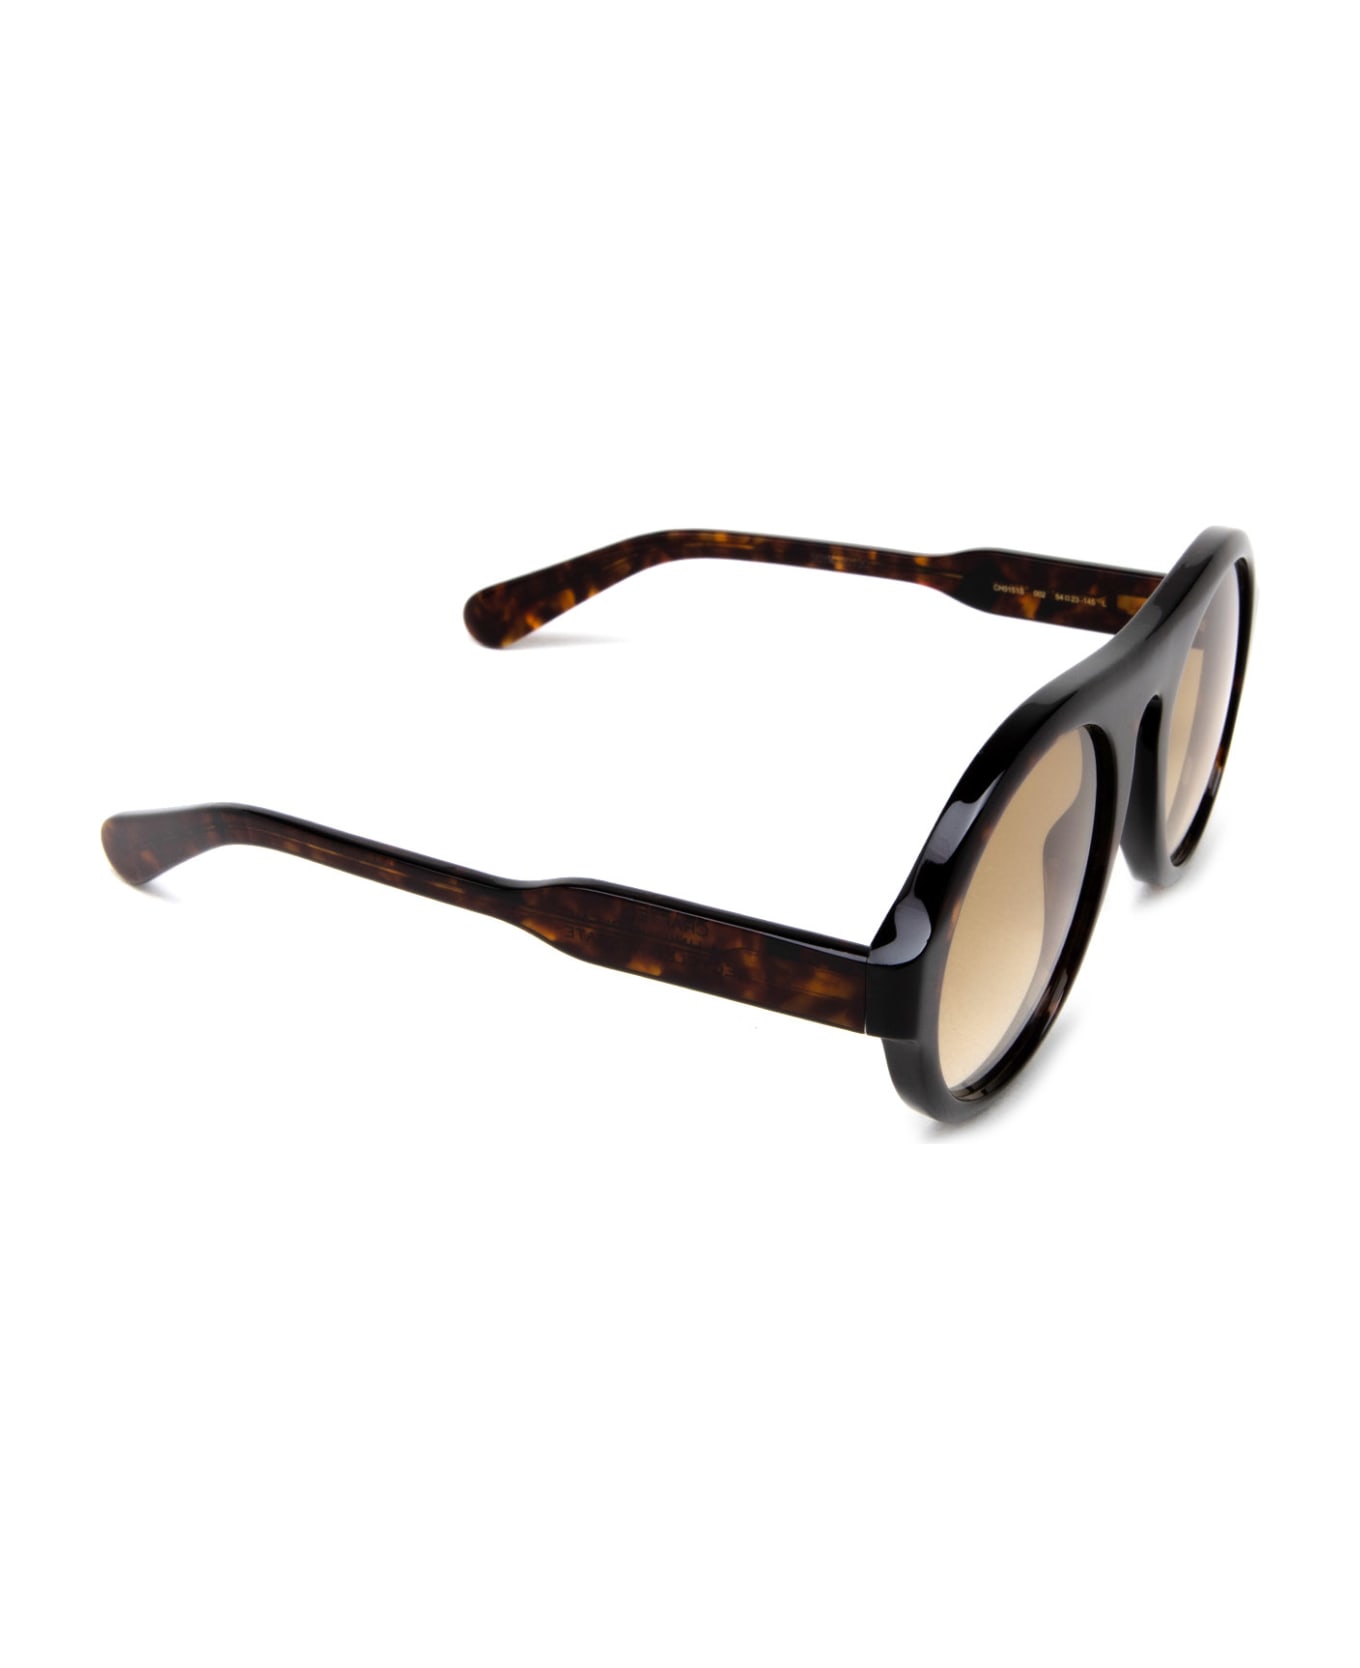 Chloé Eyewear Ch0151s Havana Sunglasses - Havana サングラス